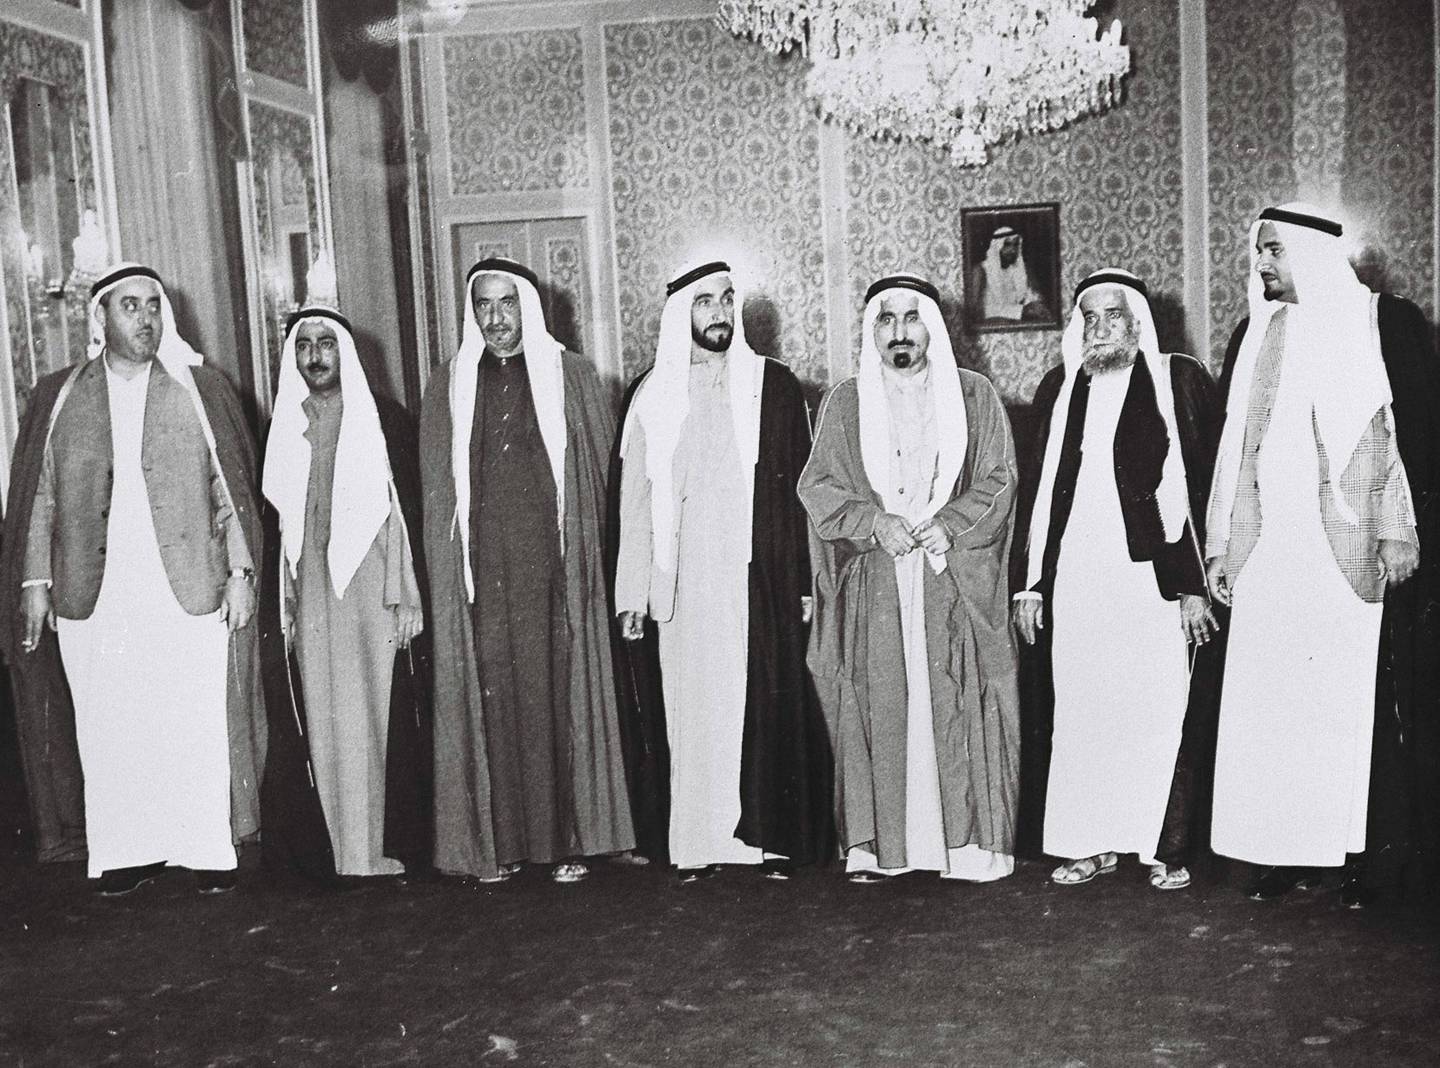 The country's leaders, 1973. From left to right: Sheikh Rashid bin Ahmed Al Mualla, Crown Prince of Umm Al Quwain; Sheikh Sultan bin Mohammed Al Qassimi, Ruler of Sharjah; Sheikh Rashid bin Saeed Al Maktoum, Vice-President and Prime Minister of the UAE and Ruler of Dubai; Sheikh Zayed bin Sultan Al Nahyan, President and Ruler of Abu Dhabi; Sheikh Saqr bin Mohammed Al Qassimi, Ruler of Ras Al Khaimah; Sheikh Mohammed bin Hamad Al Sharqi, Ruler of Fujairah; Sheikh Humaid bin Rashid Al Nuaimi, Crown Prince of Ajman.